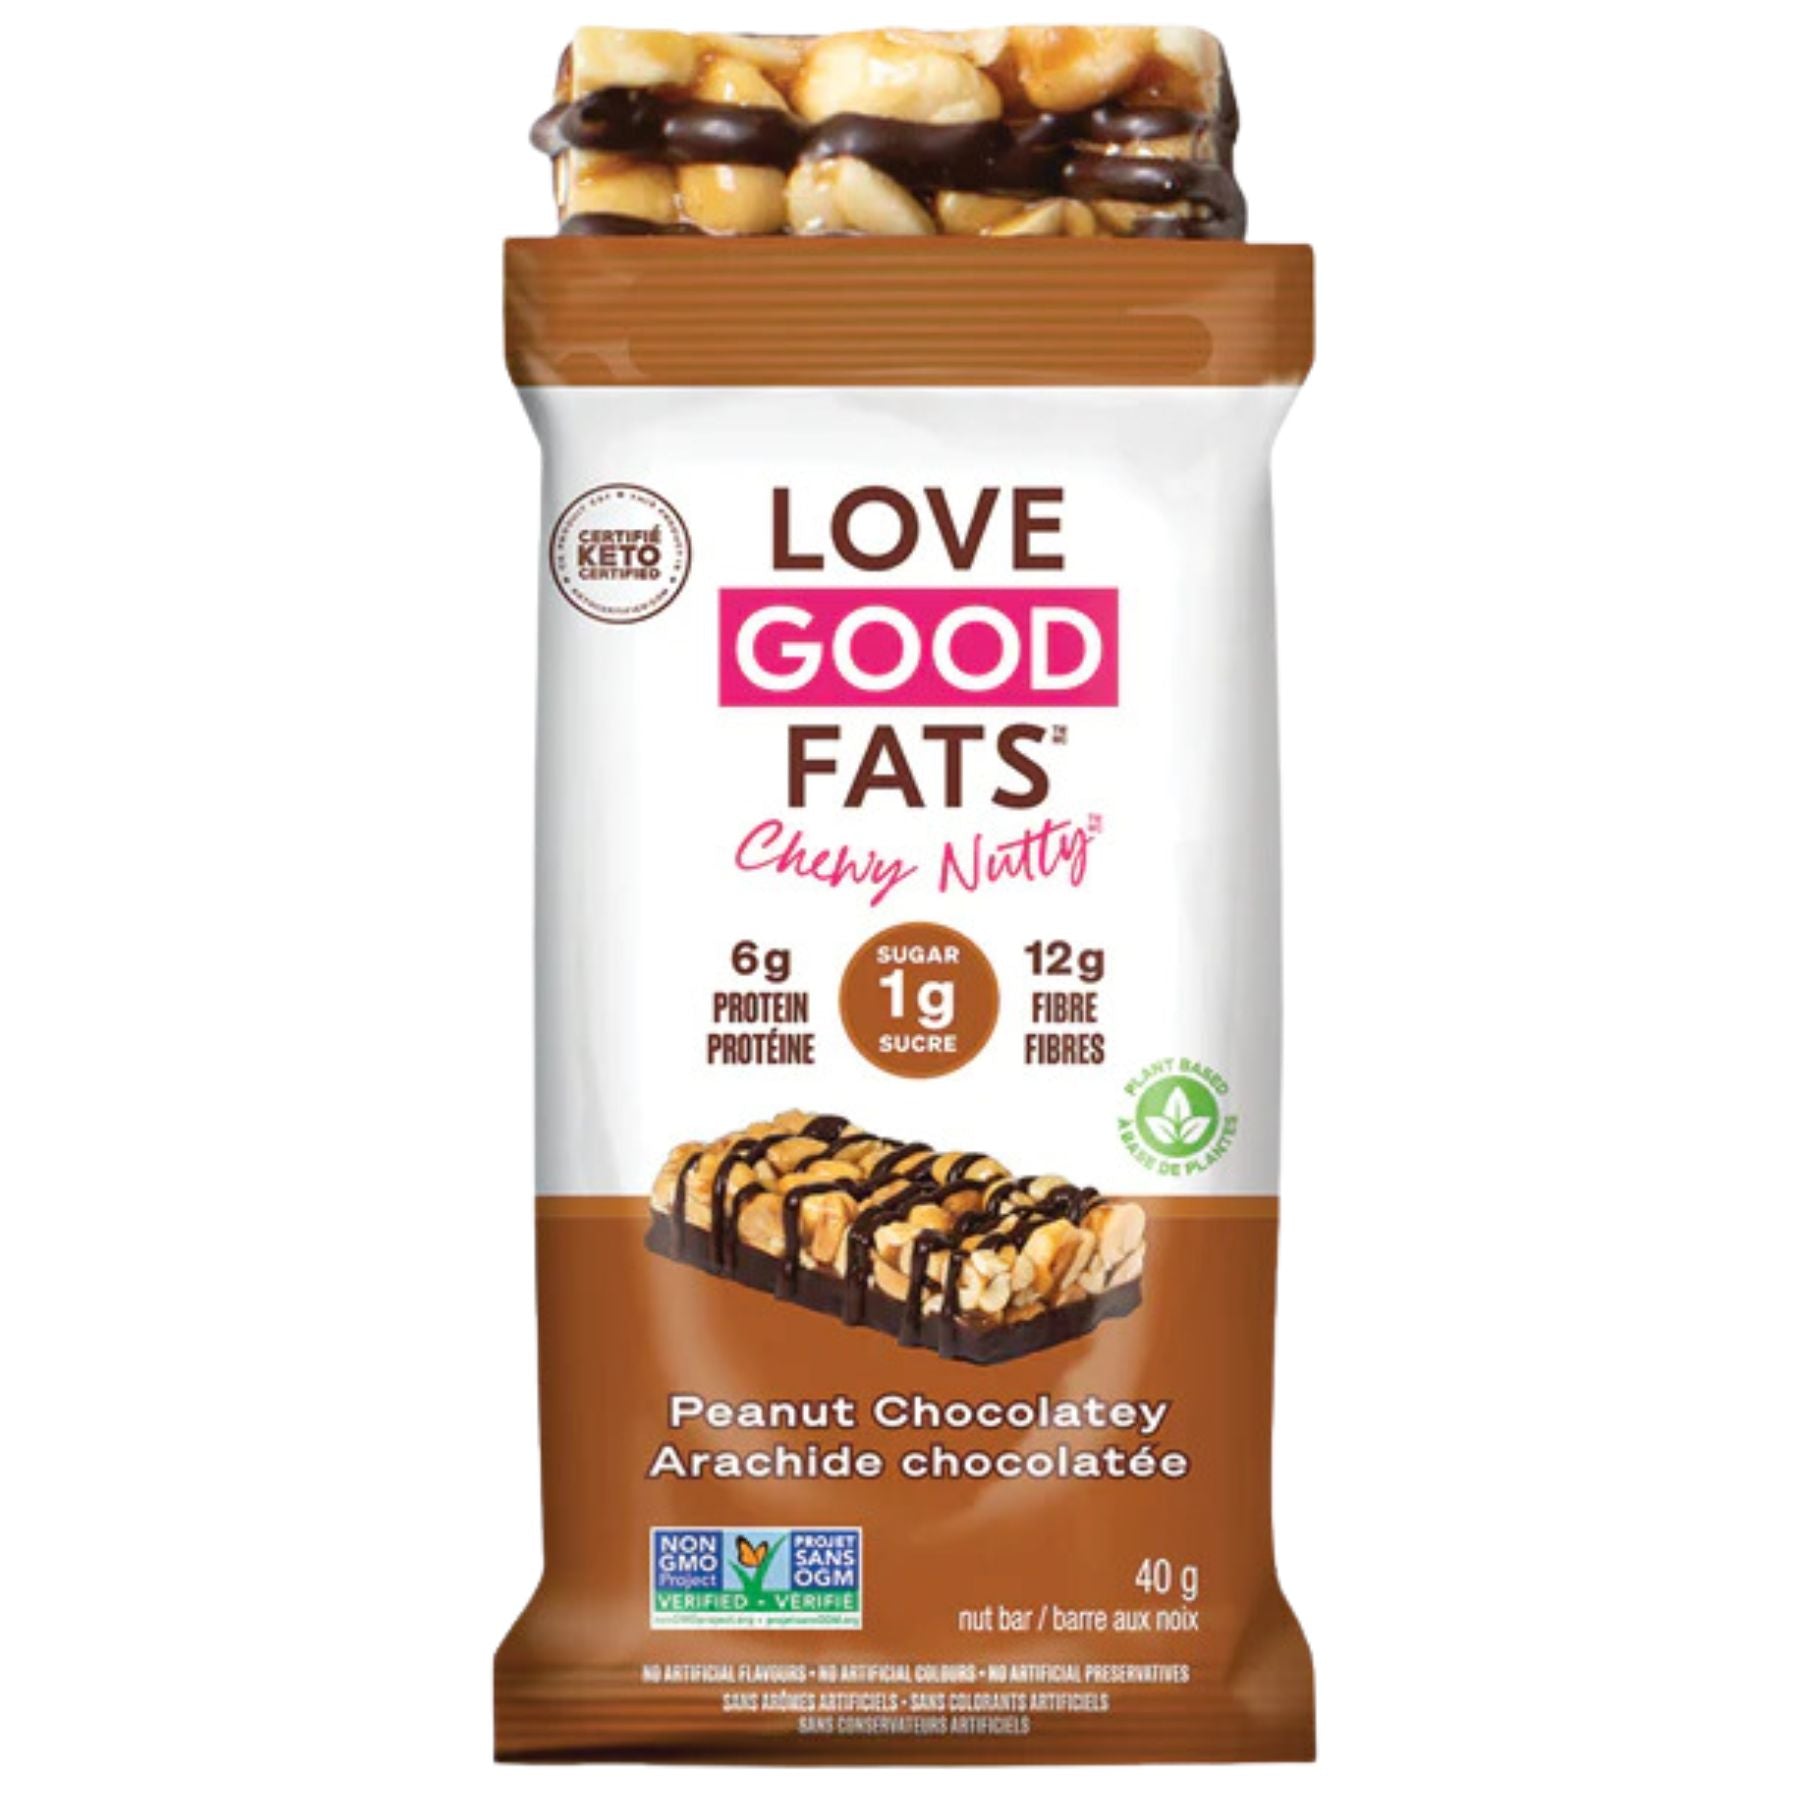 Love Good Fats Chewy Nutty Peanut Chocolate Bar (single) 40g